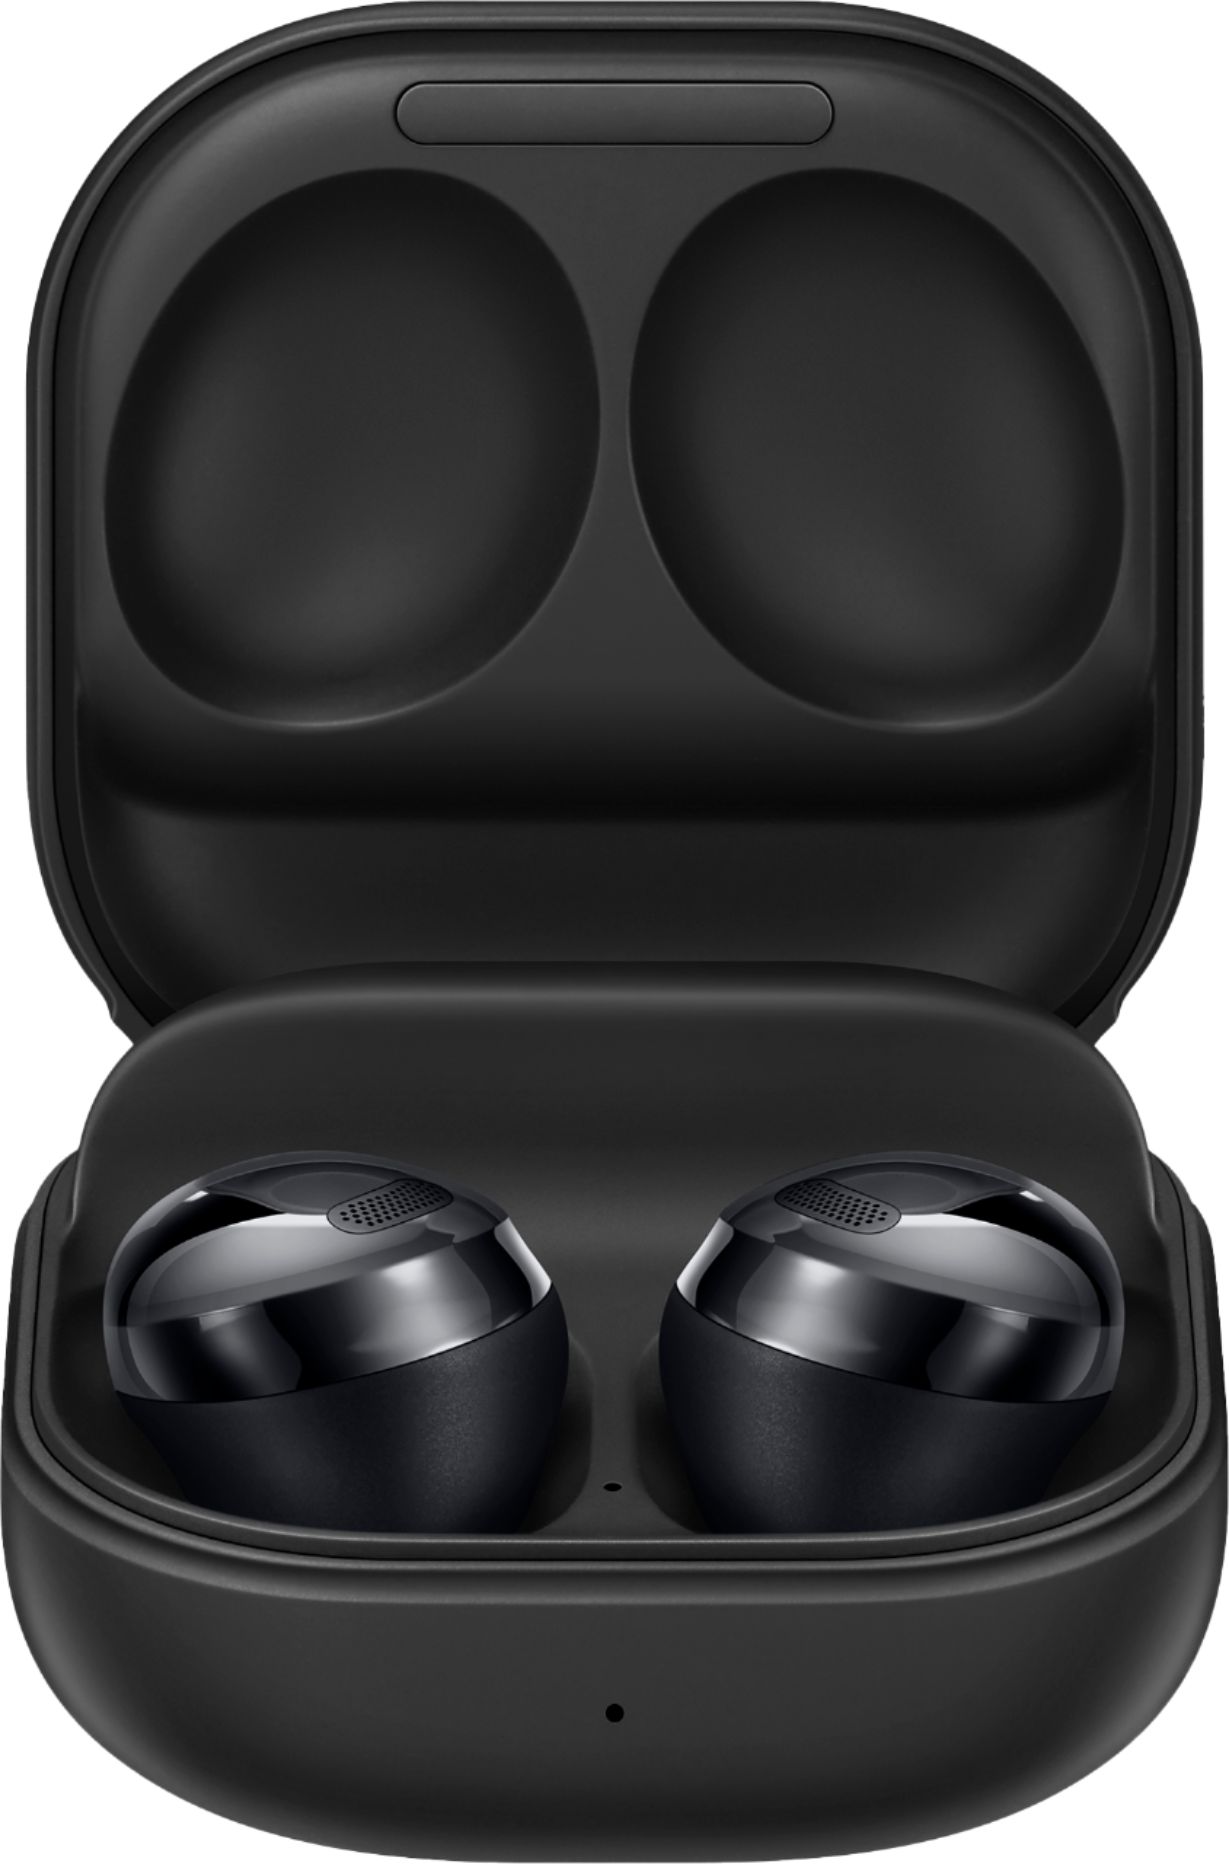 Samsung - Galaxy Buds Pro True Wireless Earbud Headphones - Phantom Black